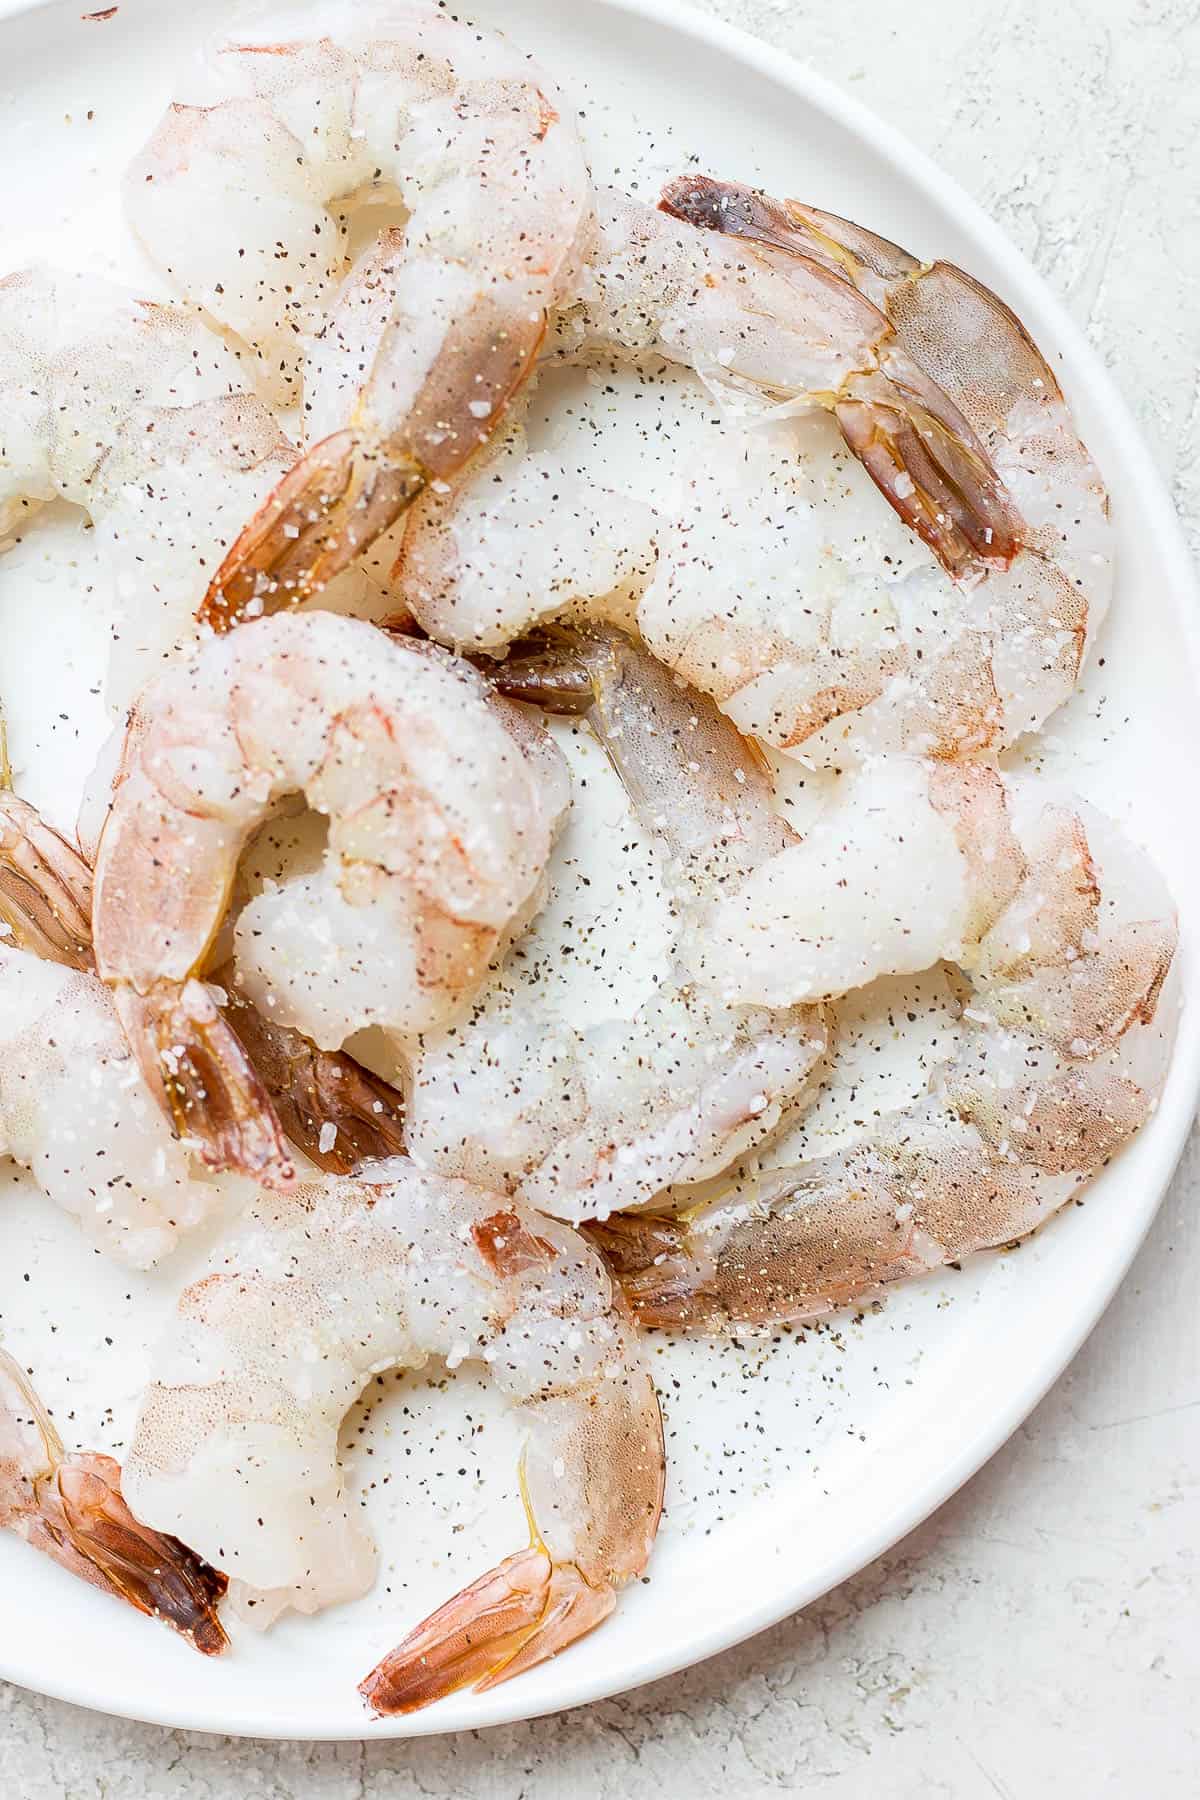 Raw shrimp with salt & pepper on a plate.